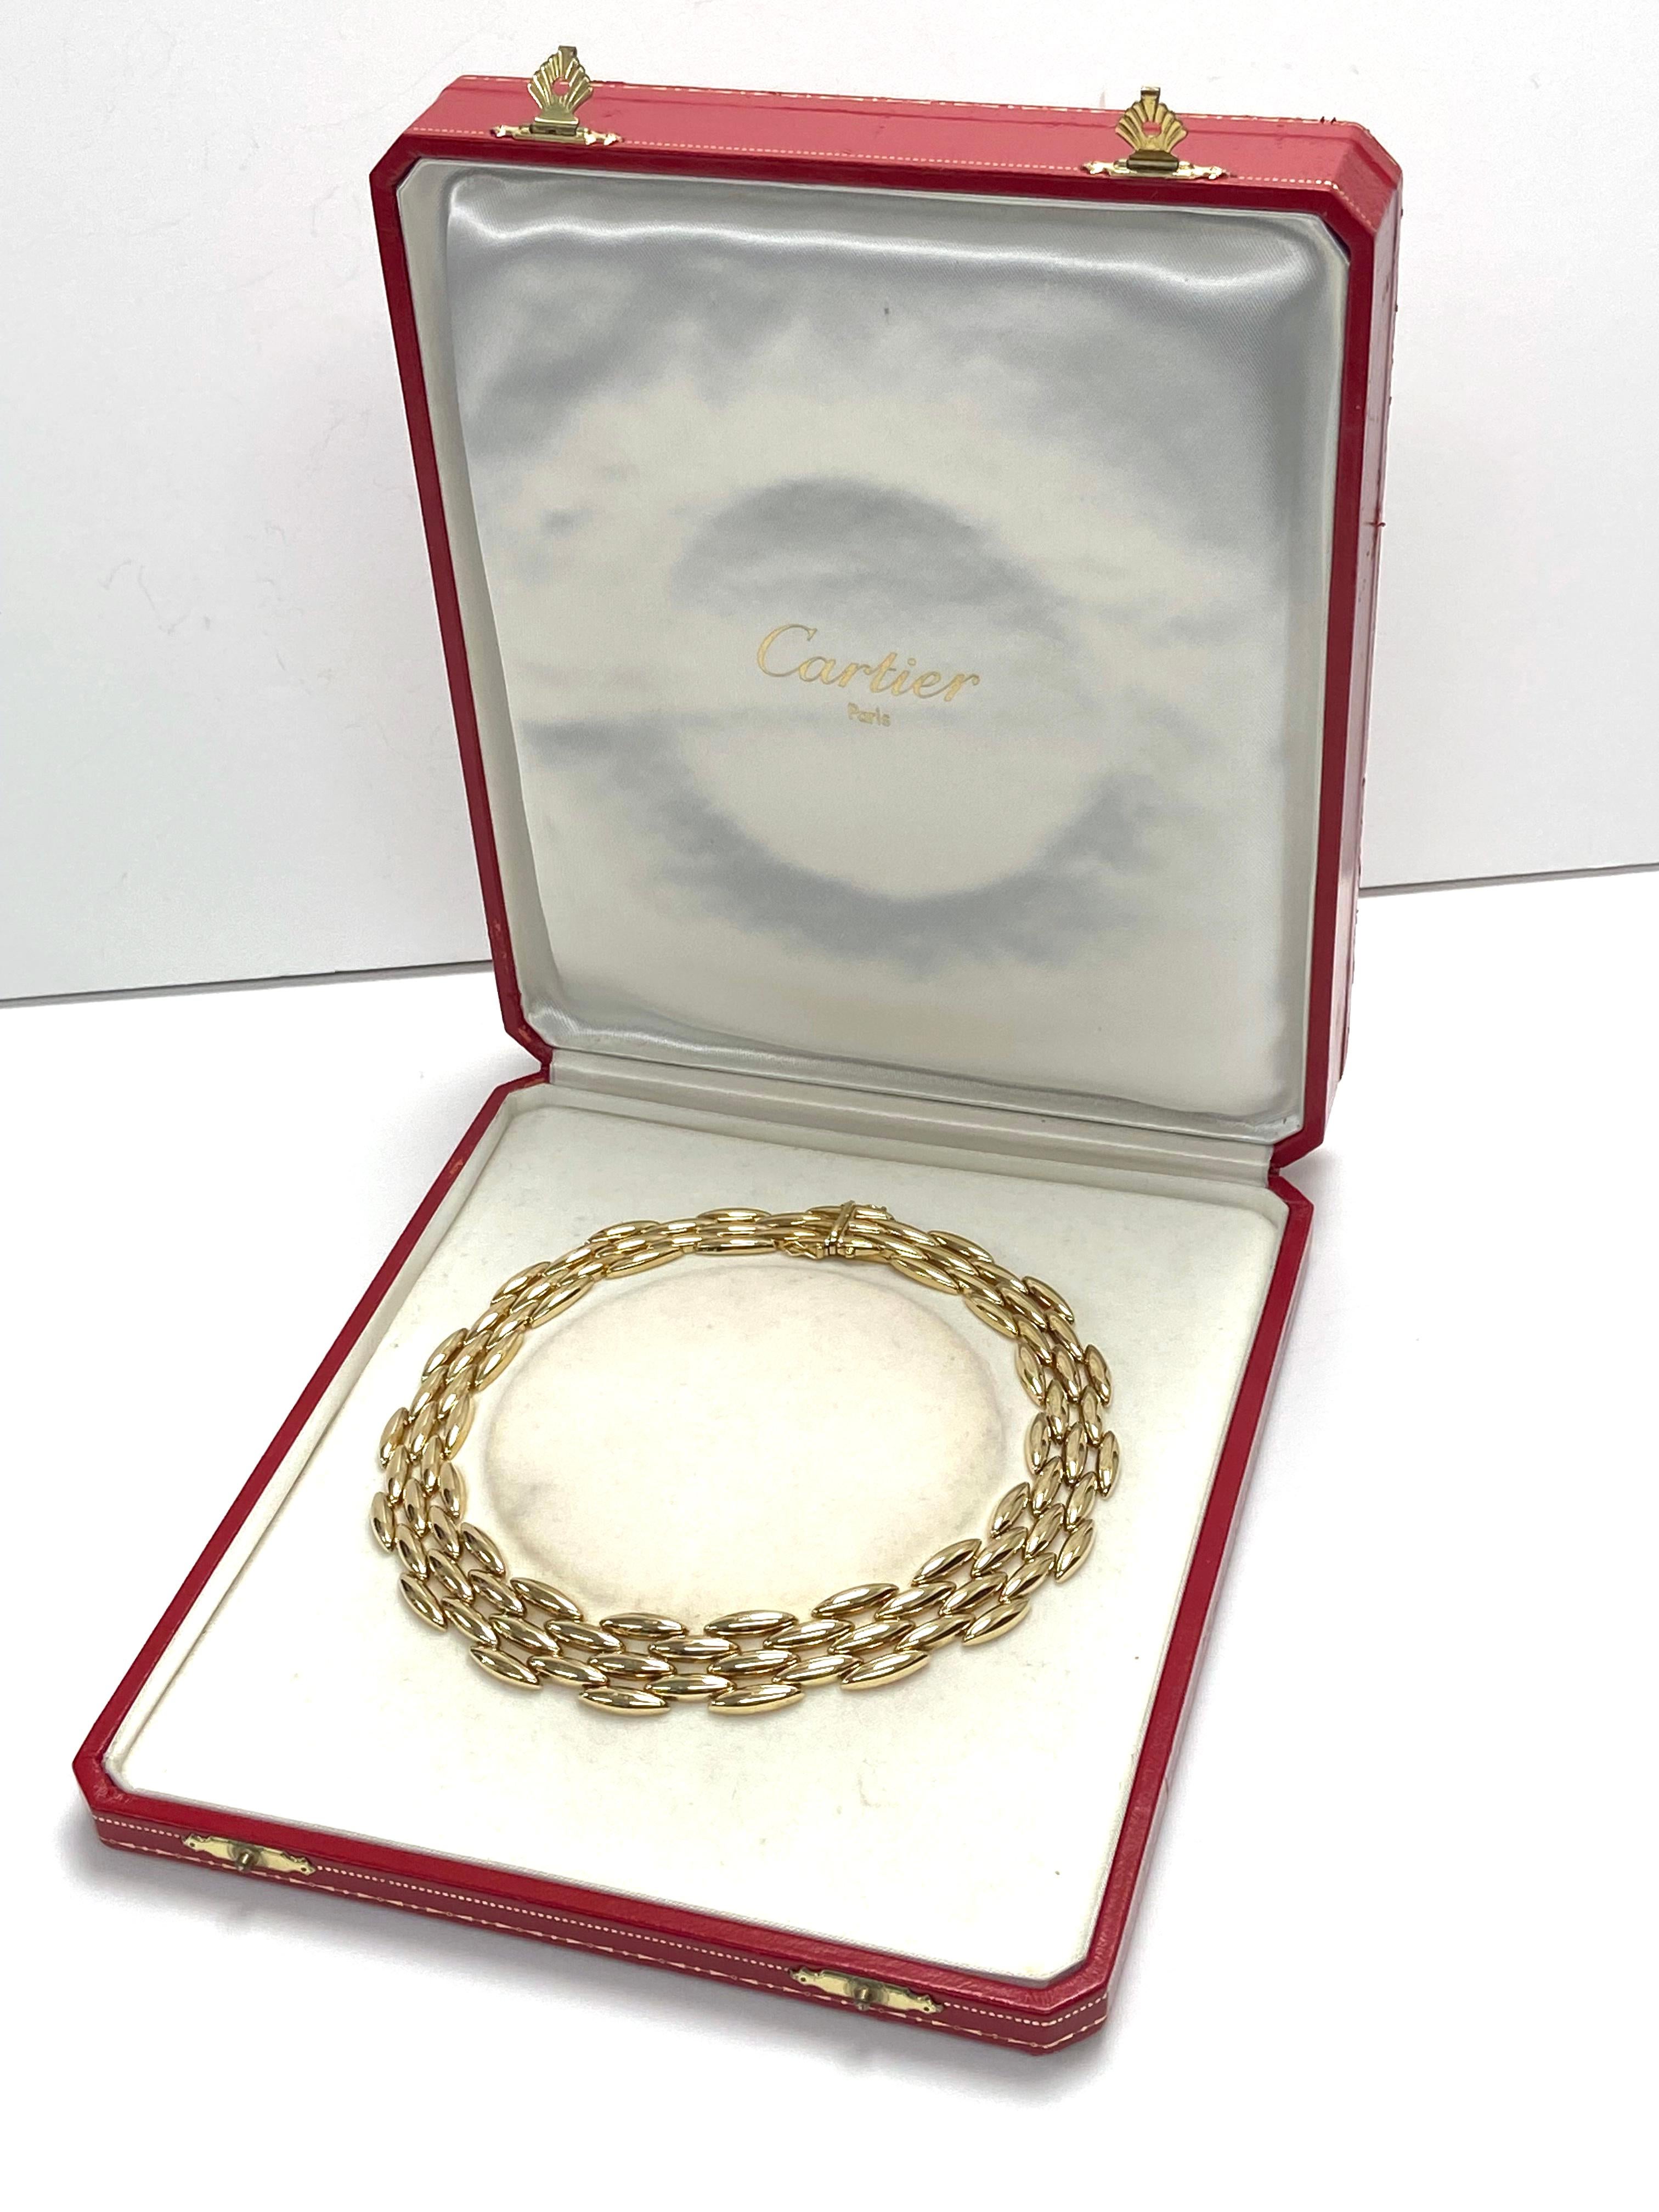 Women's Cartier Gentiane Row Gold Necklace